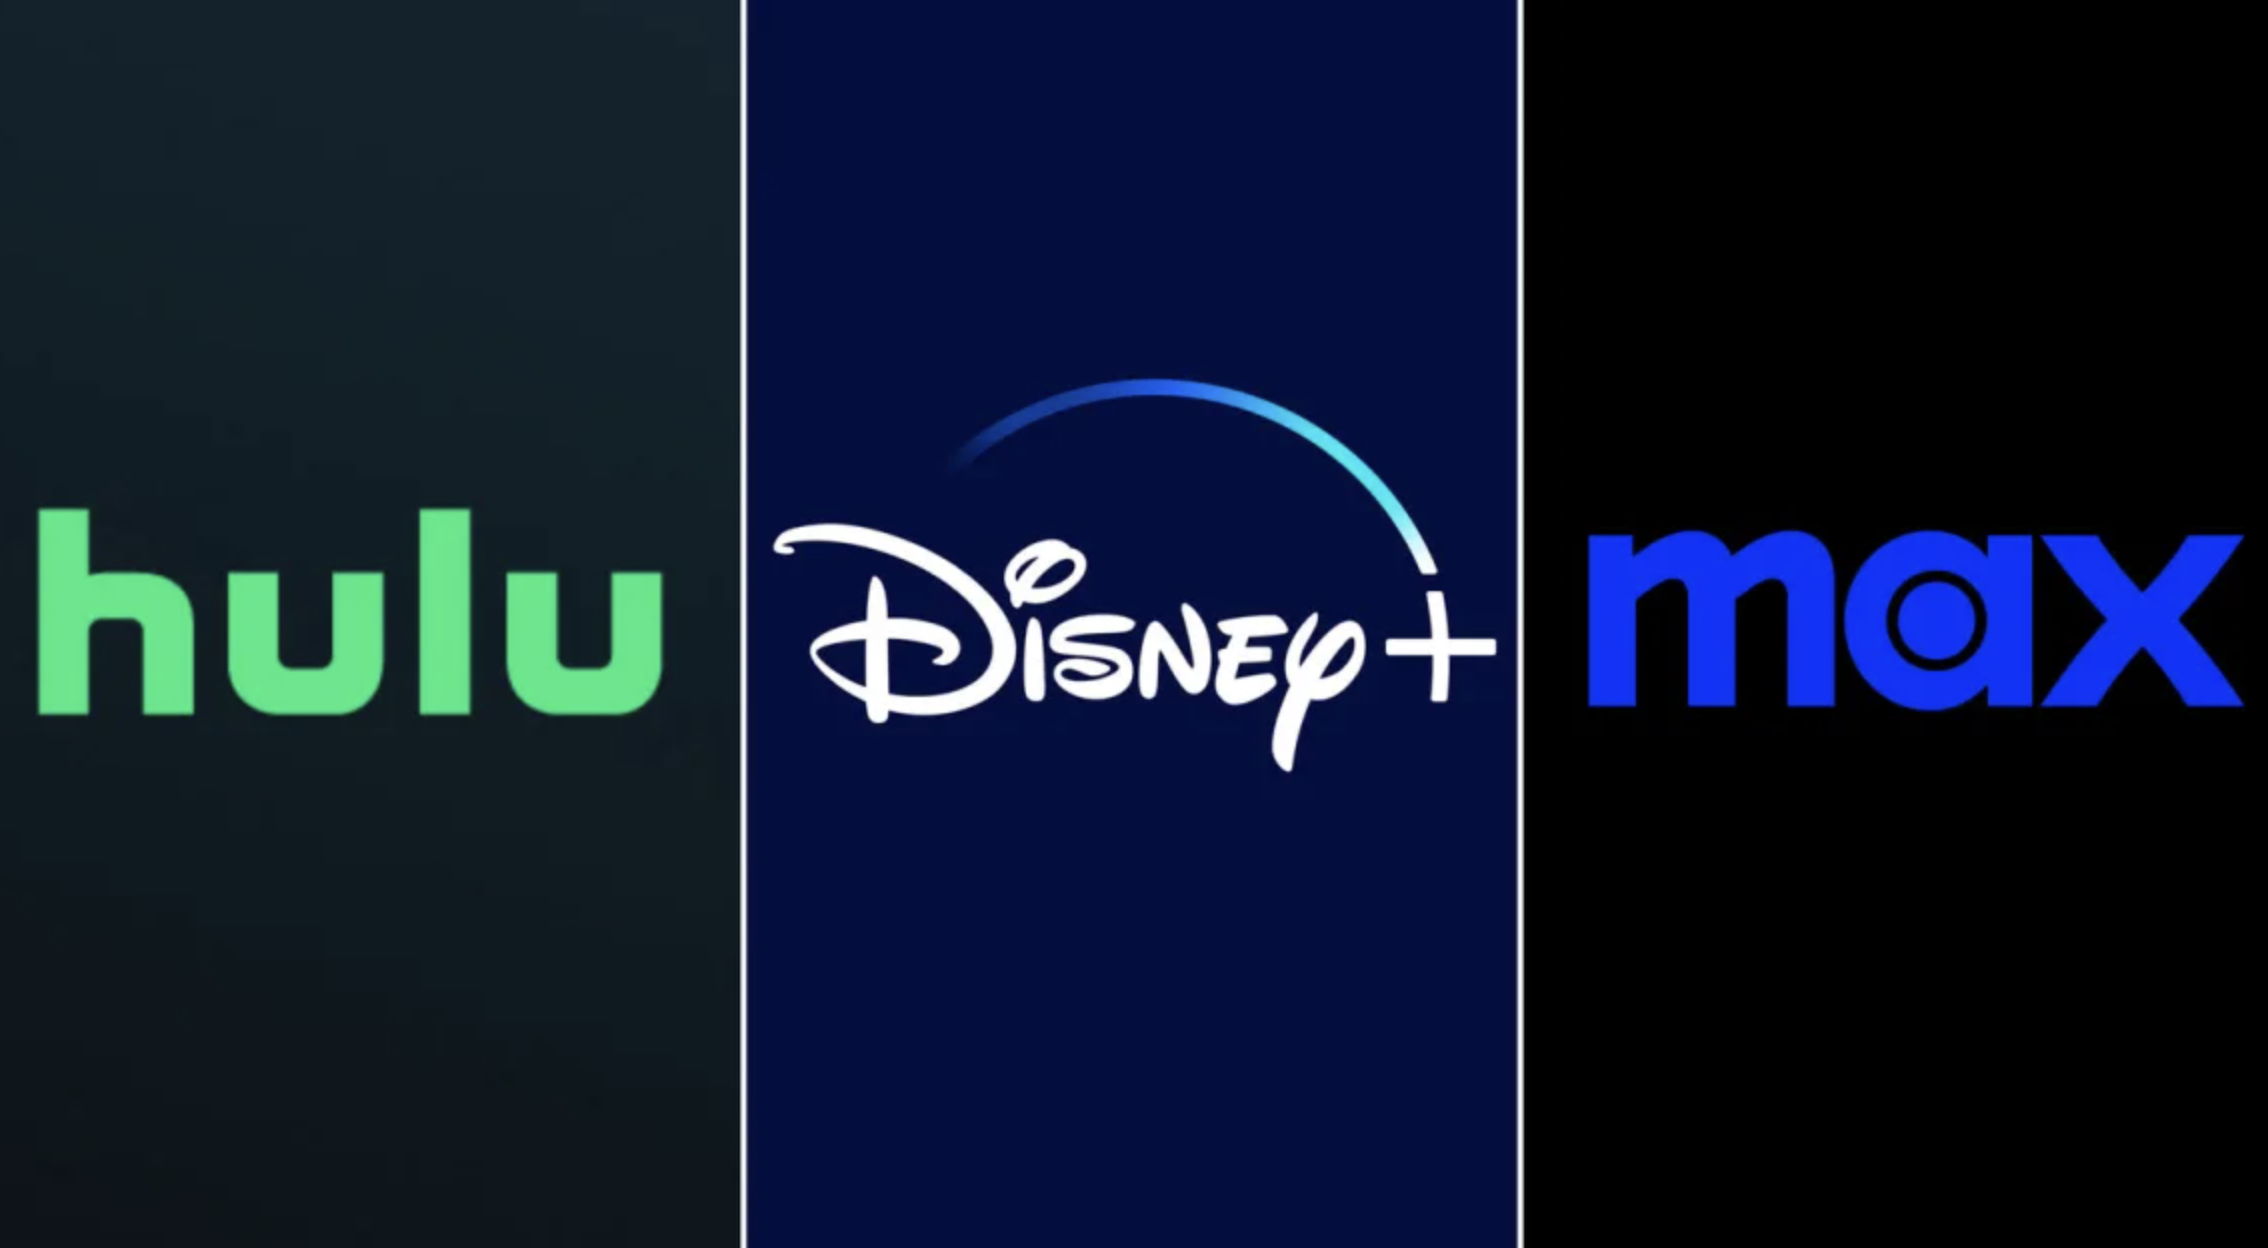 Disney+ Hulu Max